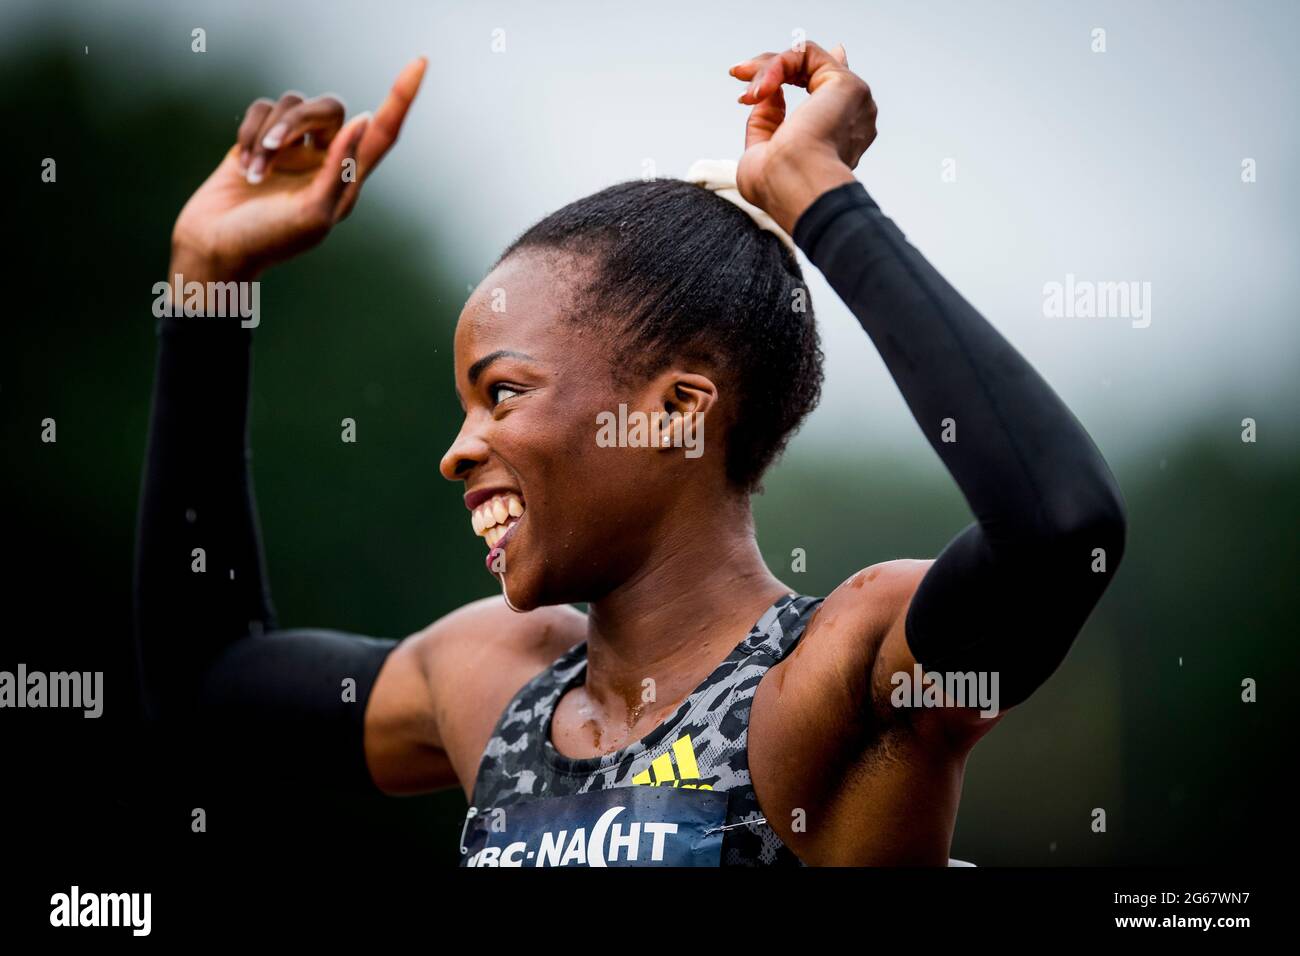 Belgian Cynthia Bolingo Mbongo celebrates a Belgian record of 50.72 at the women's 400m during the 'KBC Nacht van de Atletiek' athletics meeting in He Stock Photo